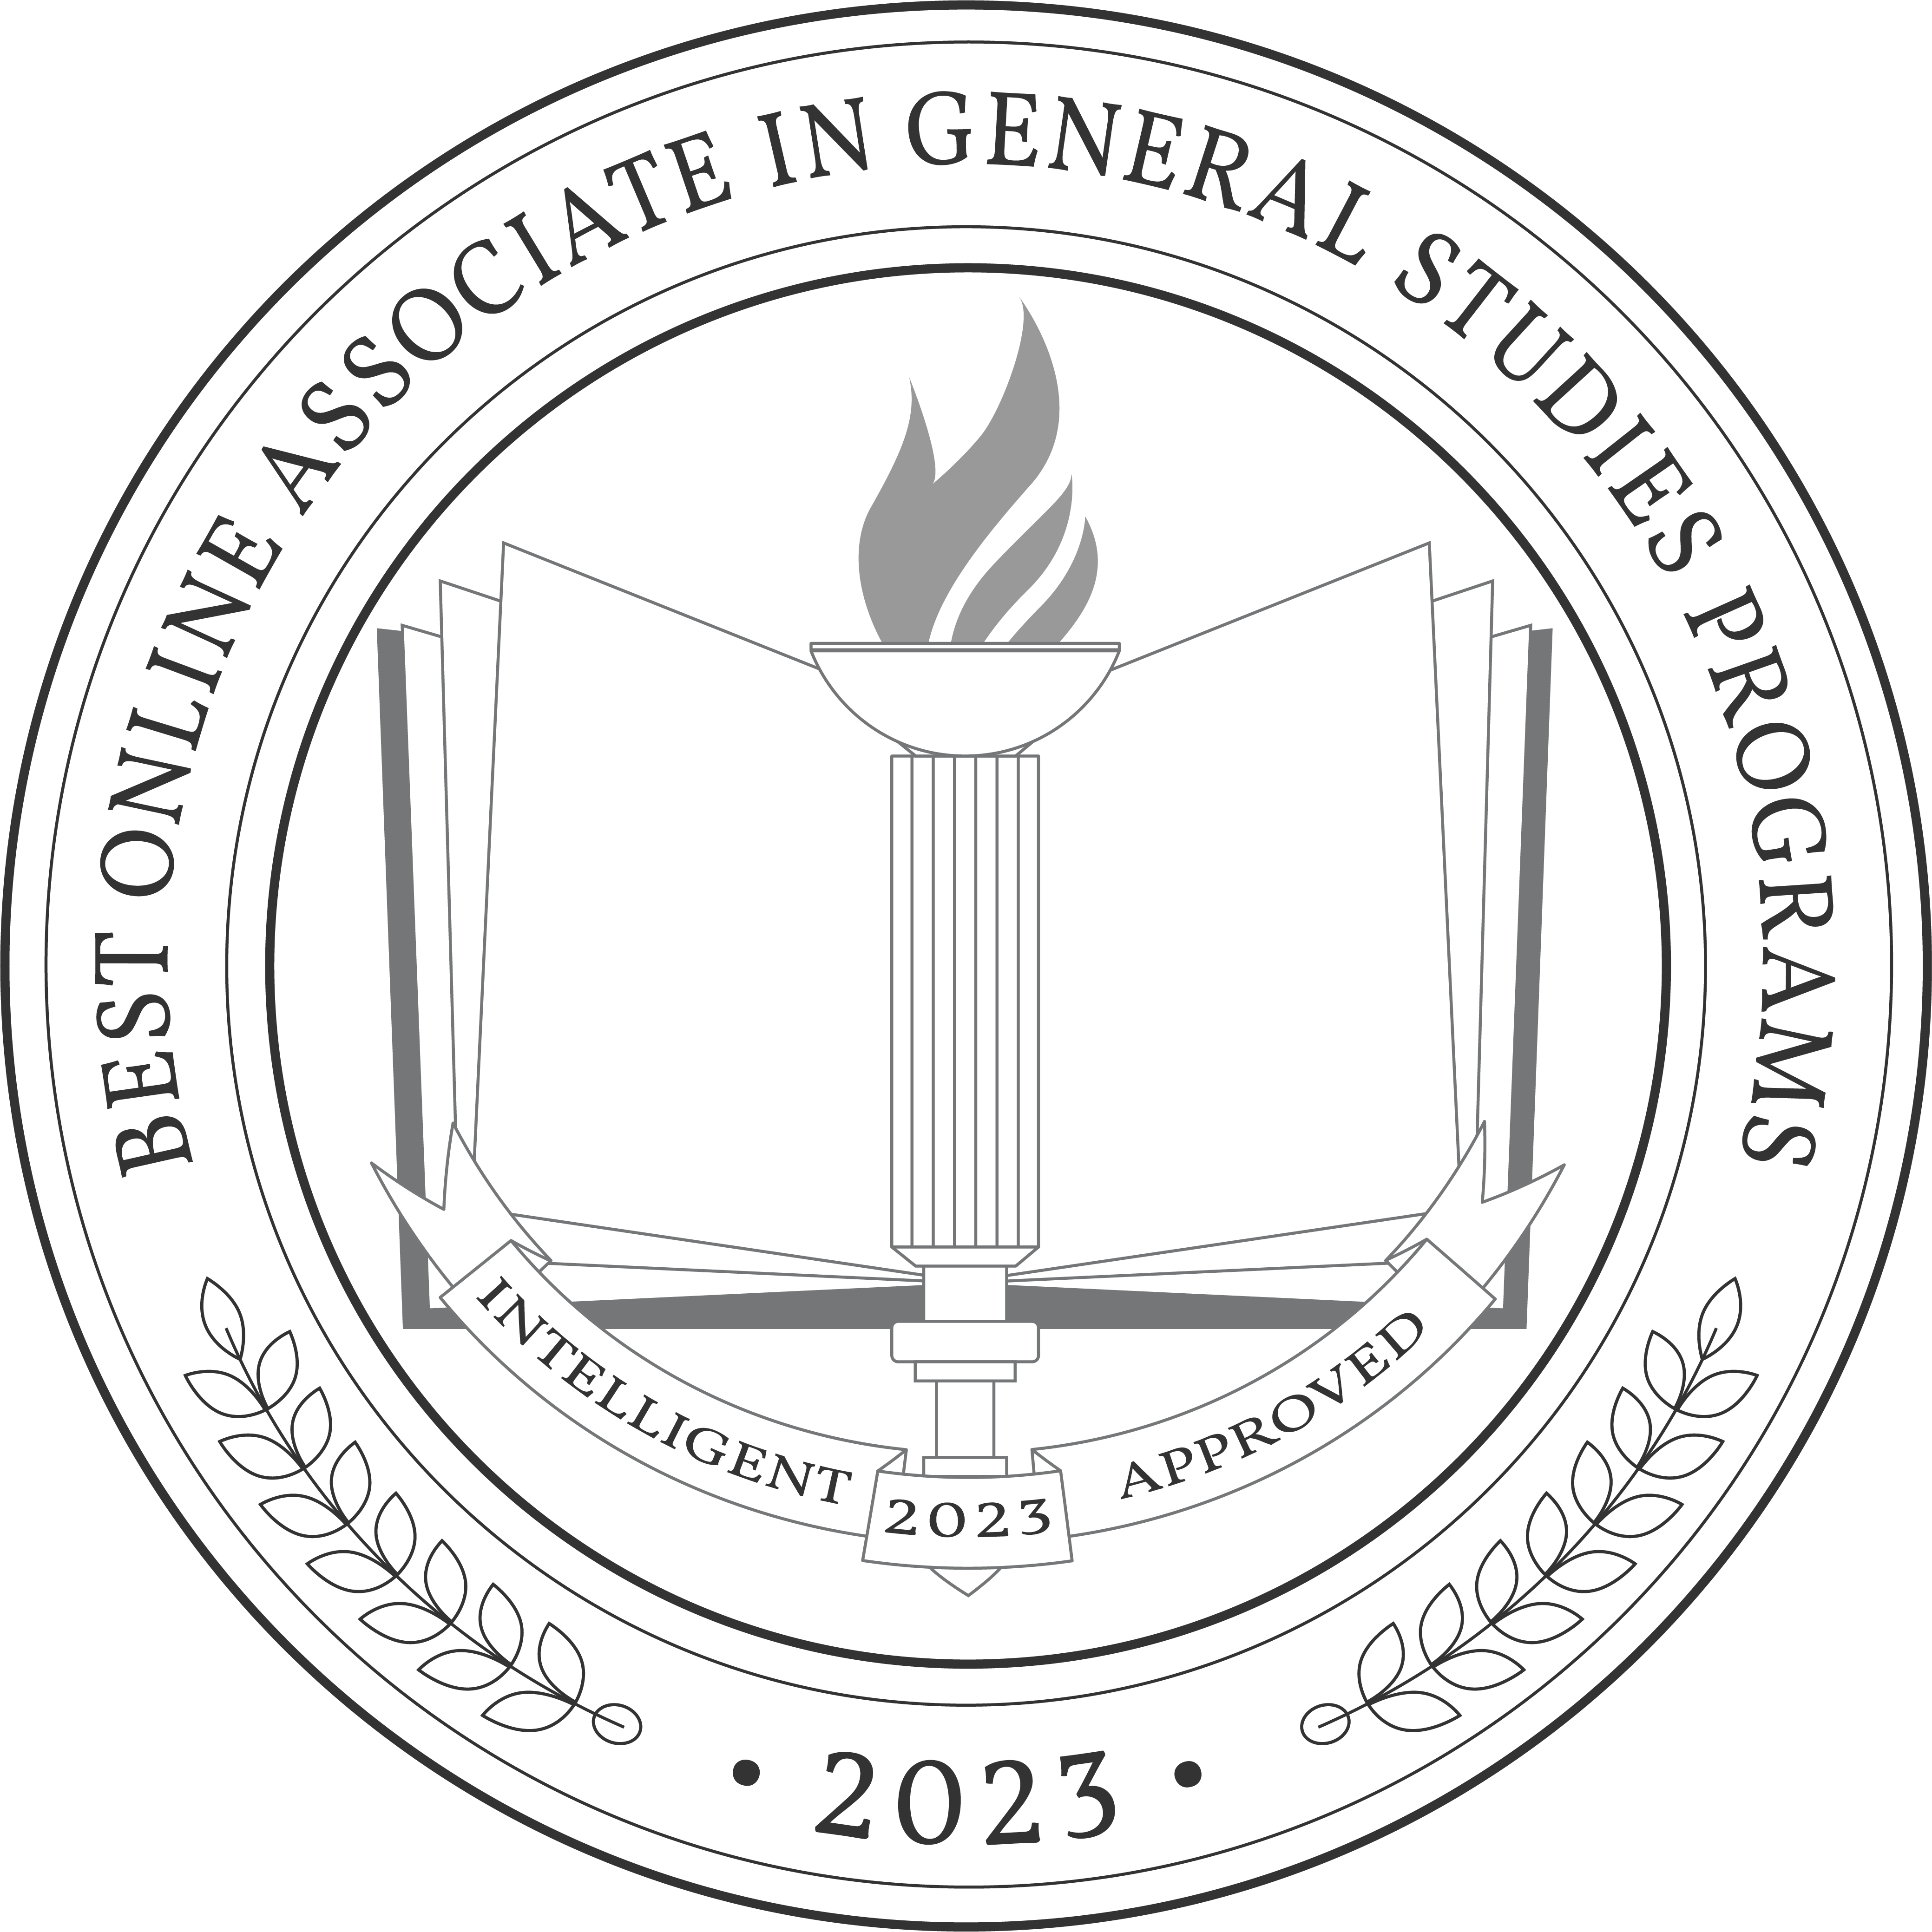 Best Online Associate in General Studies Programs badge